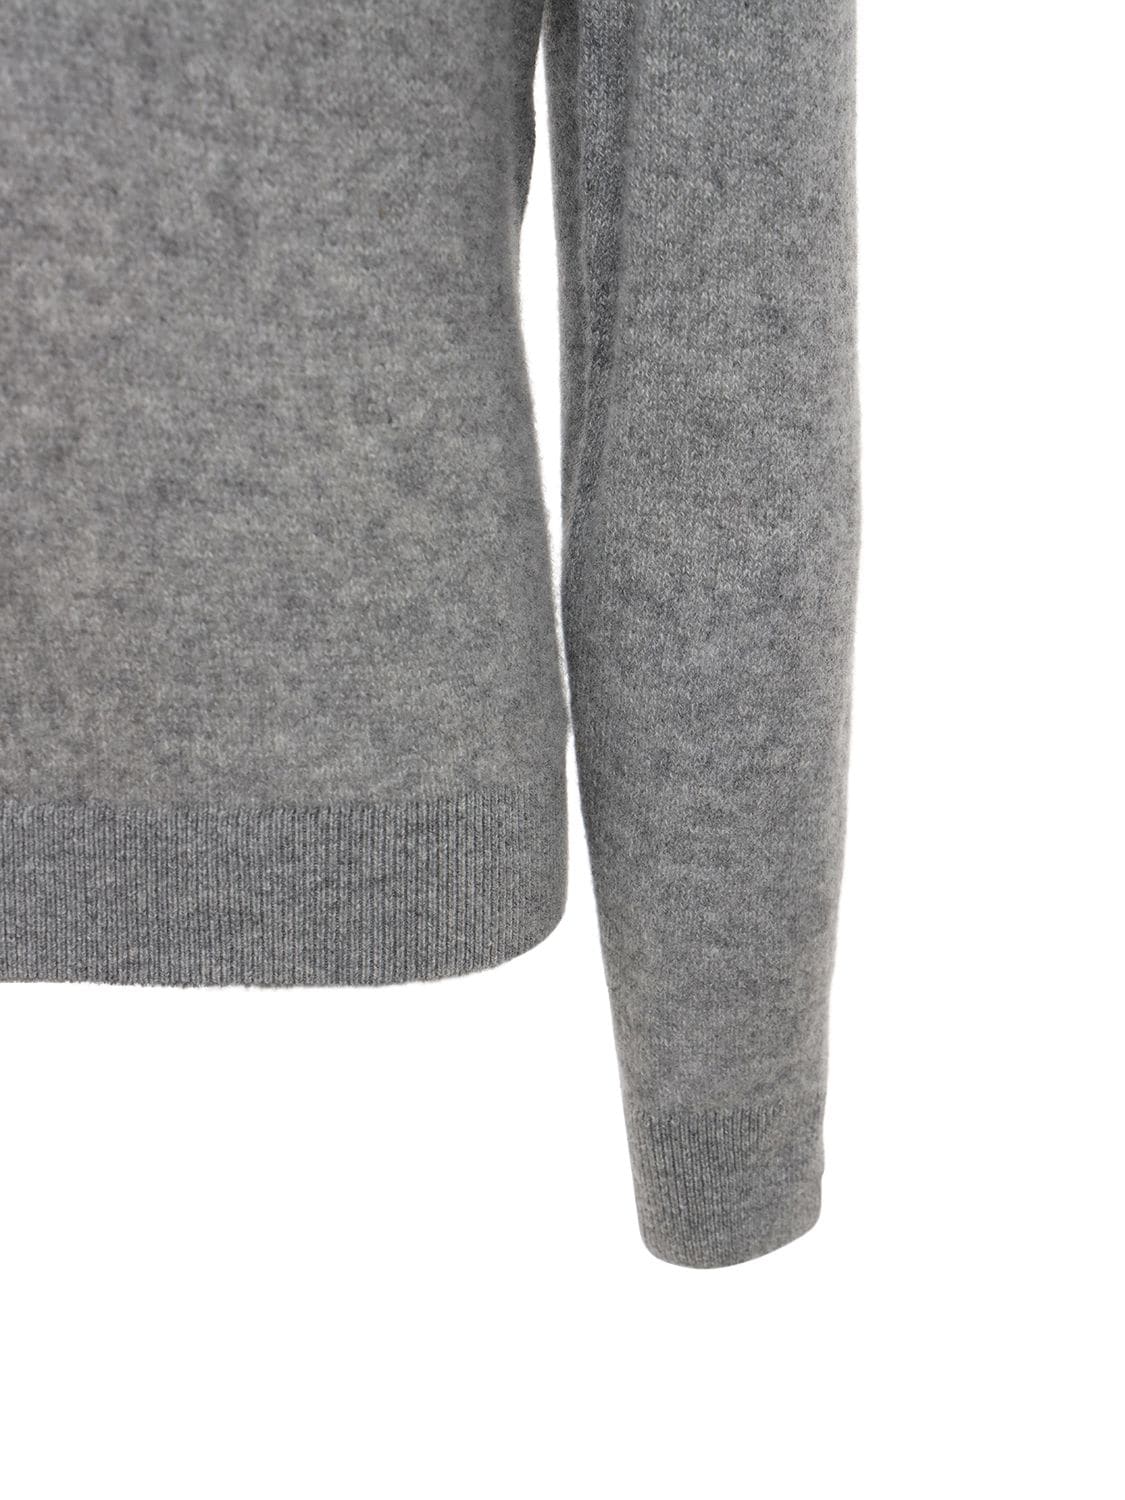 Shop Khaite Joe Cashmere Sweater In Grey